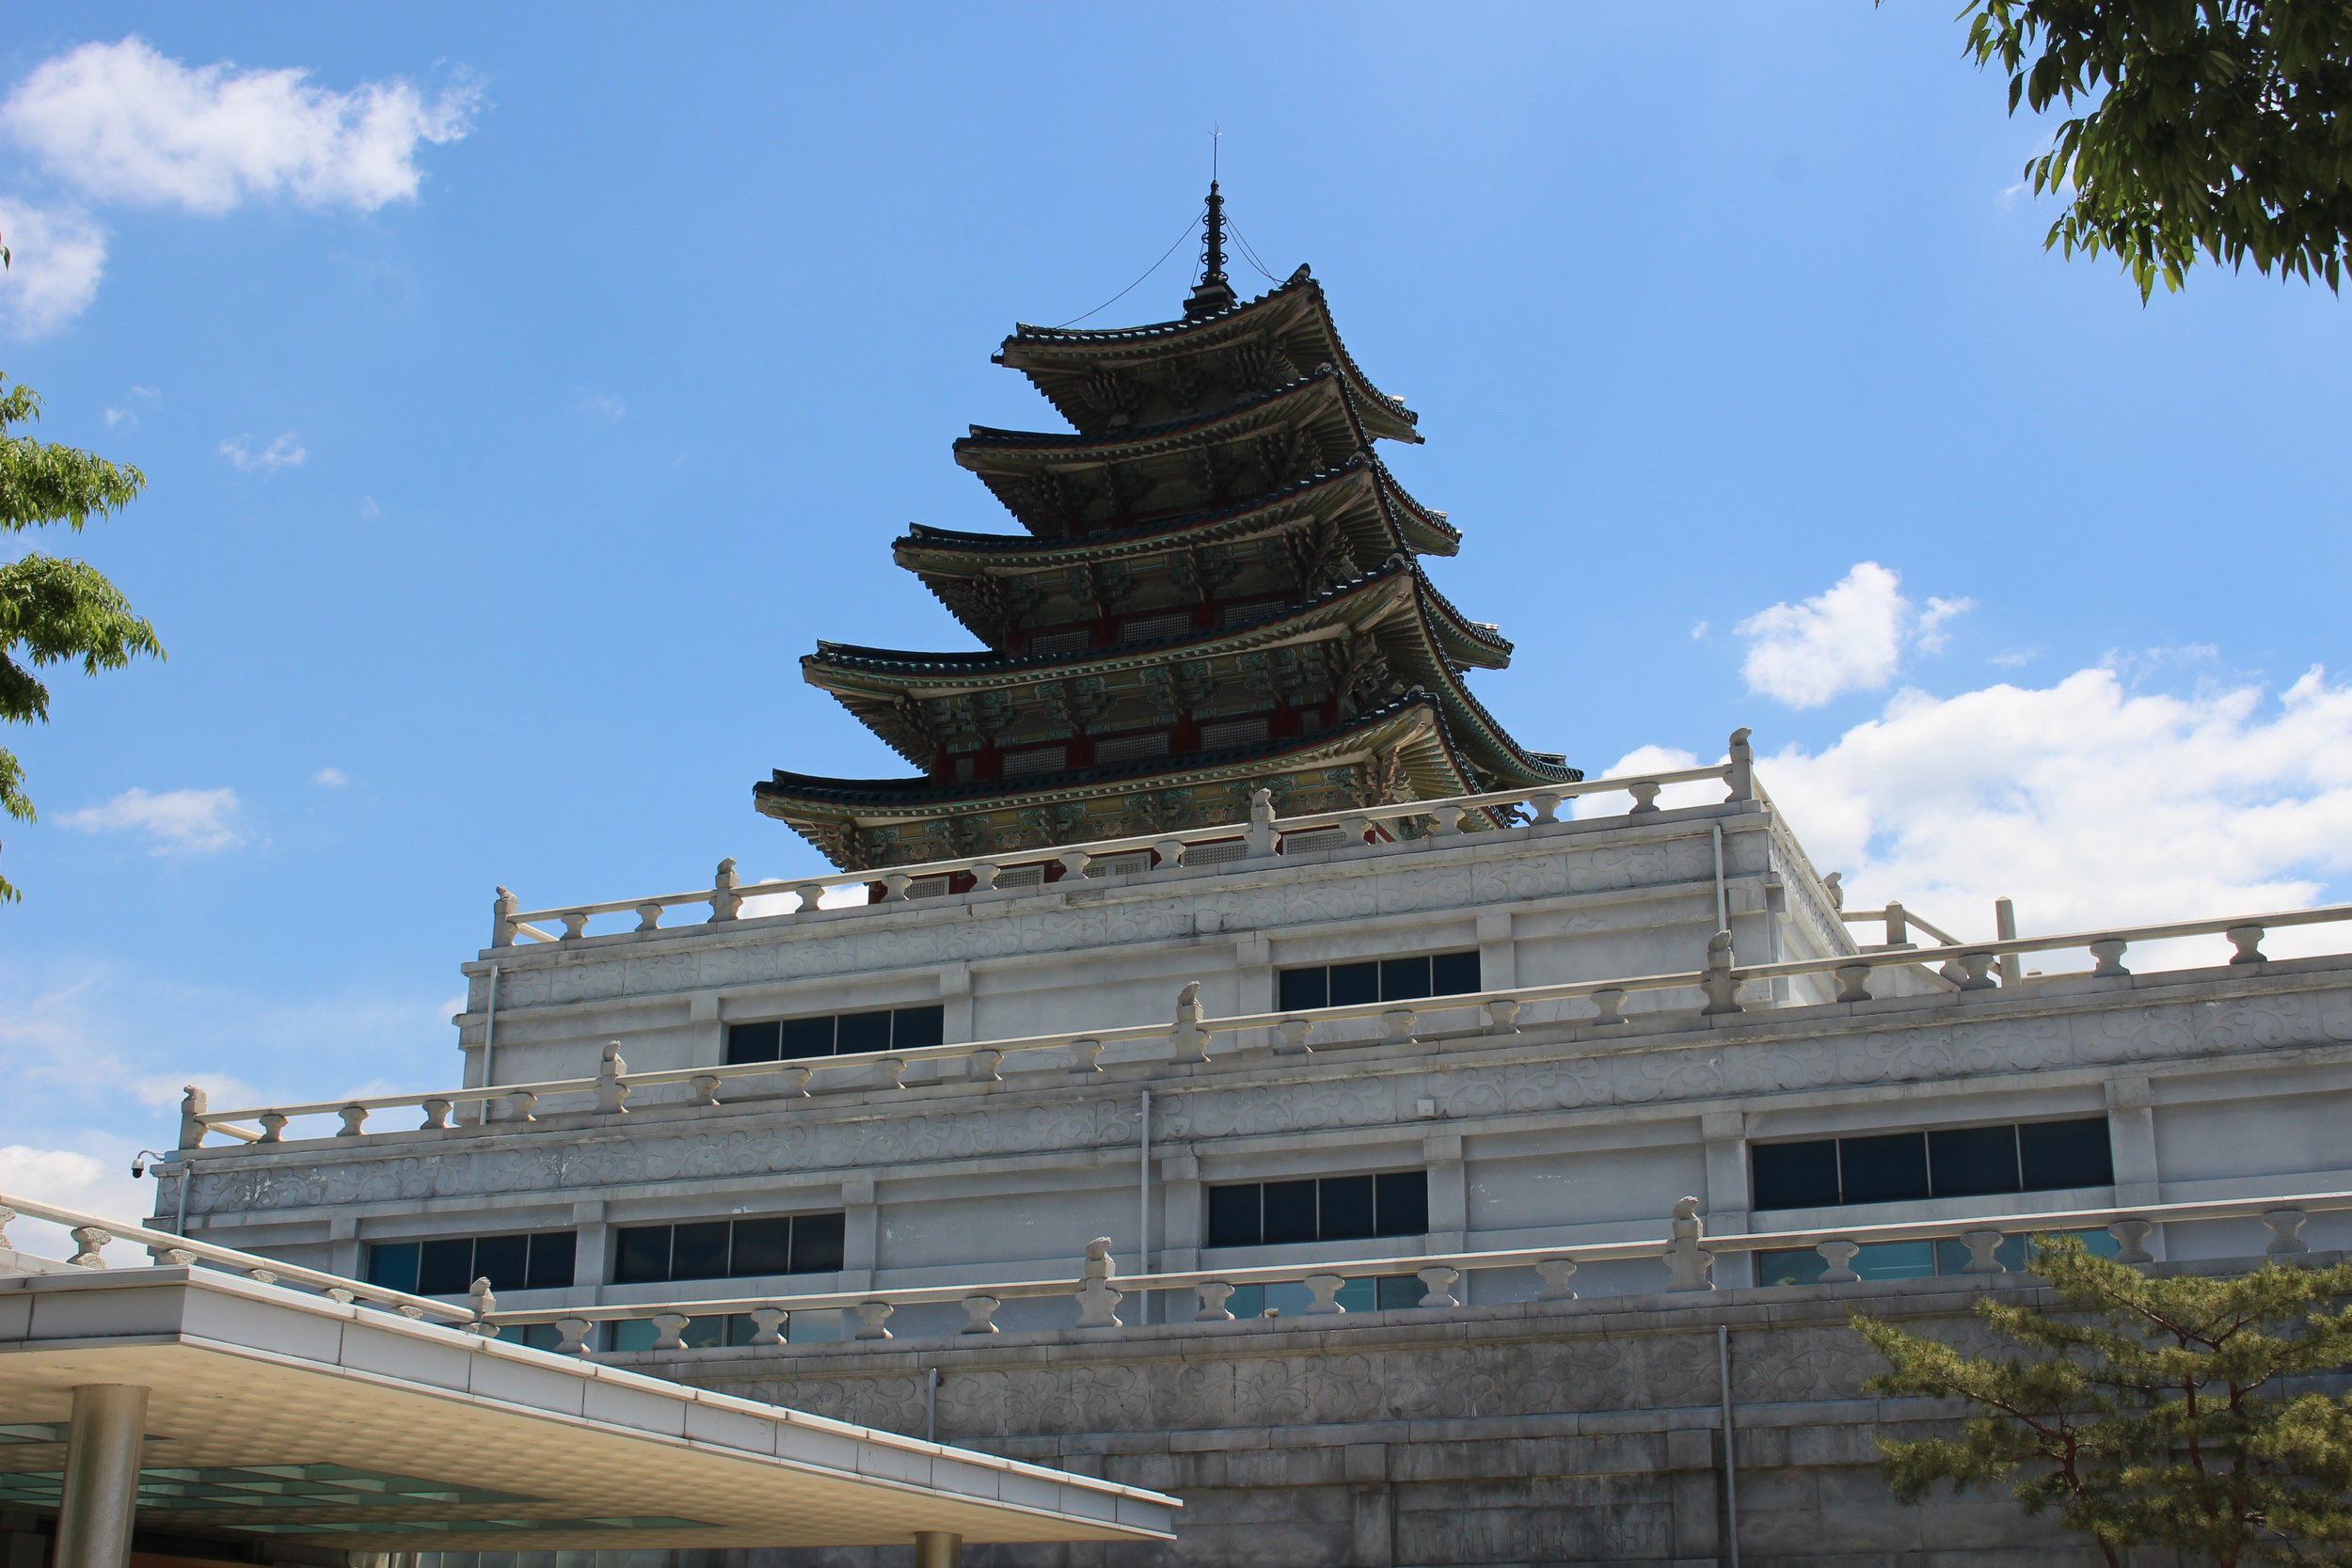  Pagodas in Seoul 